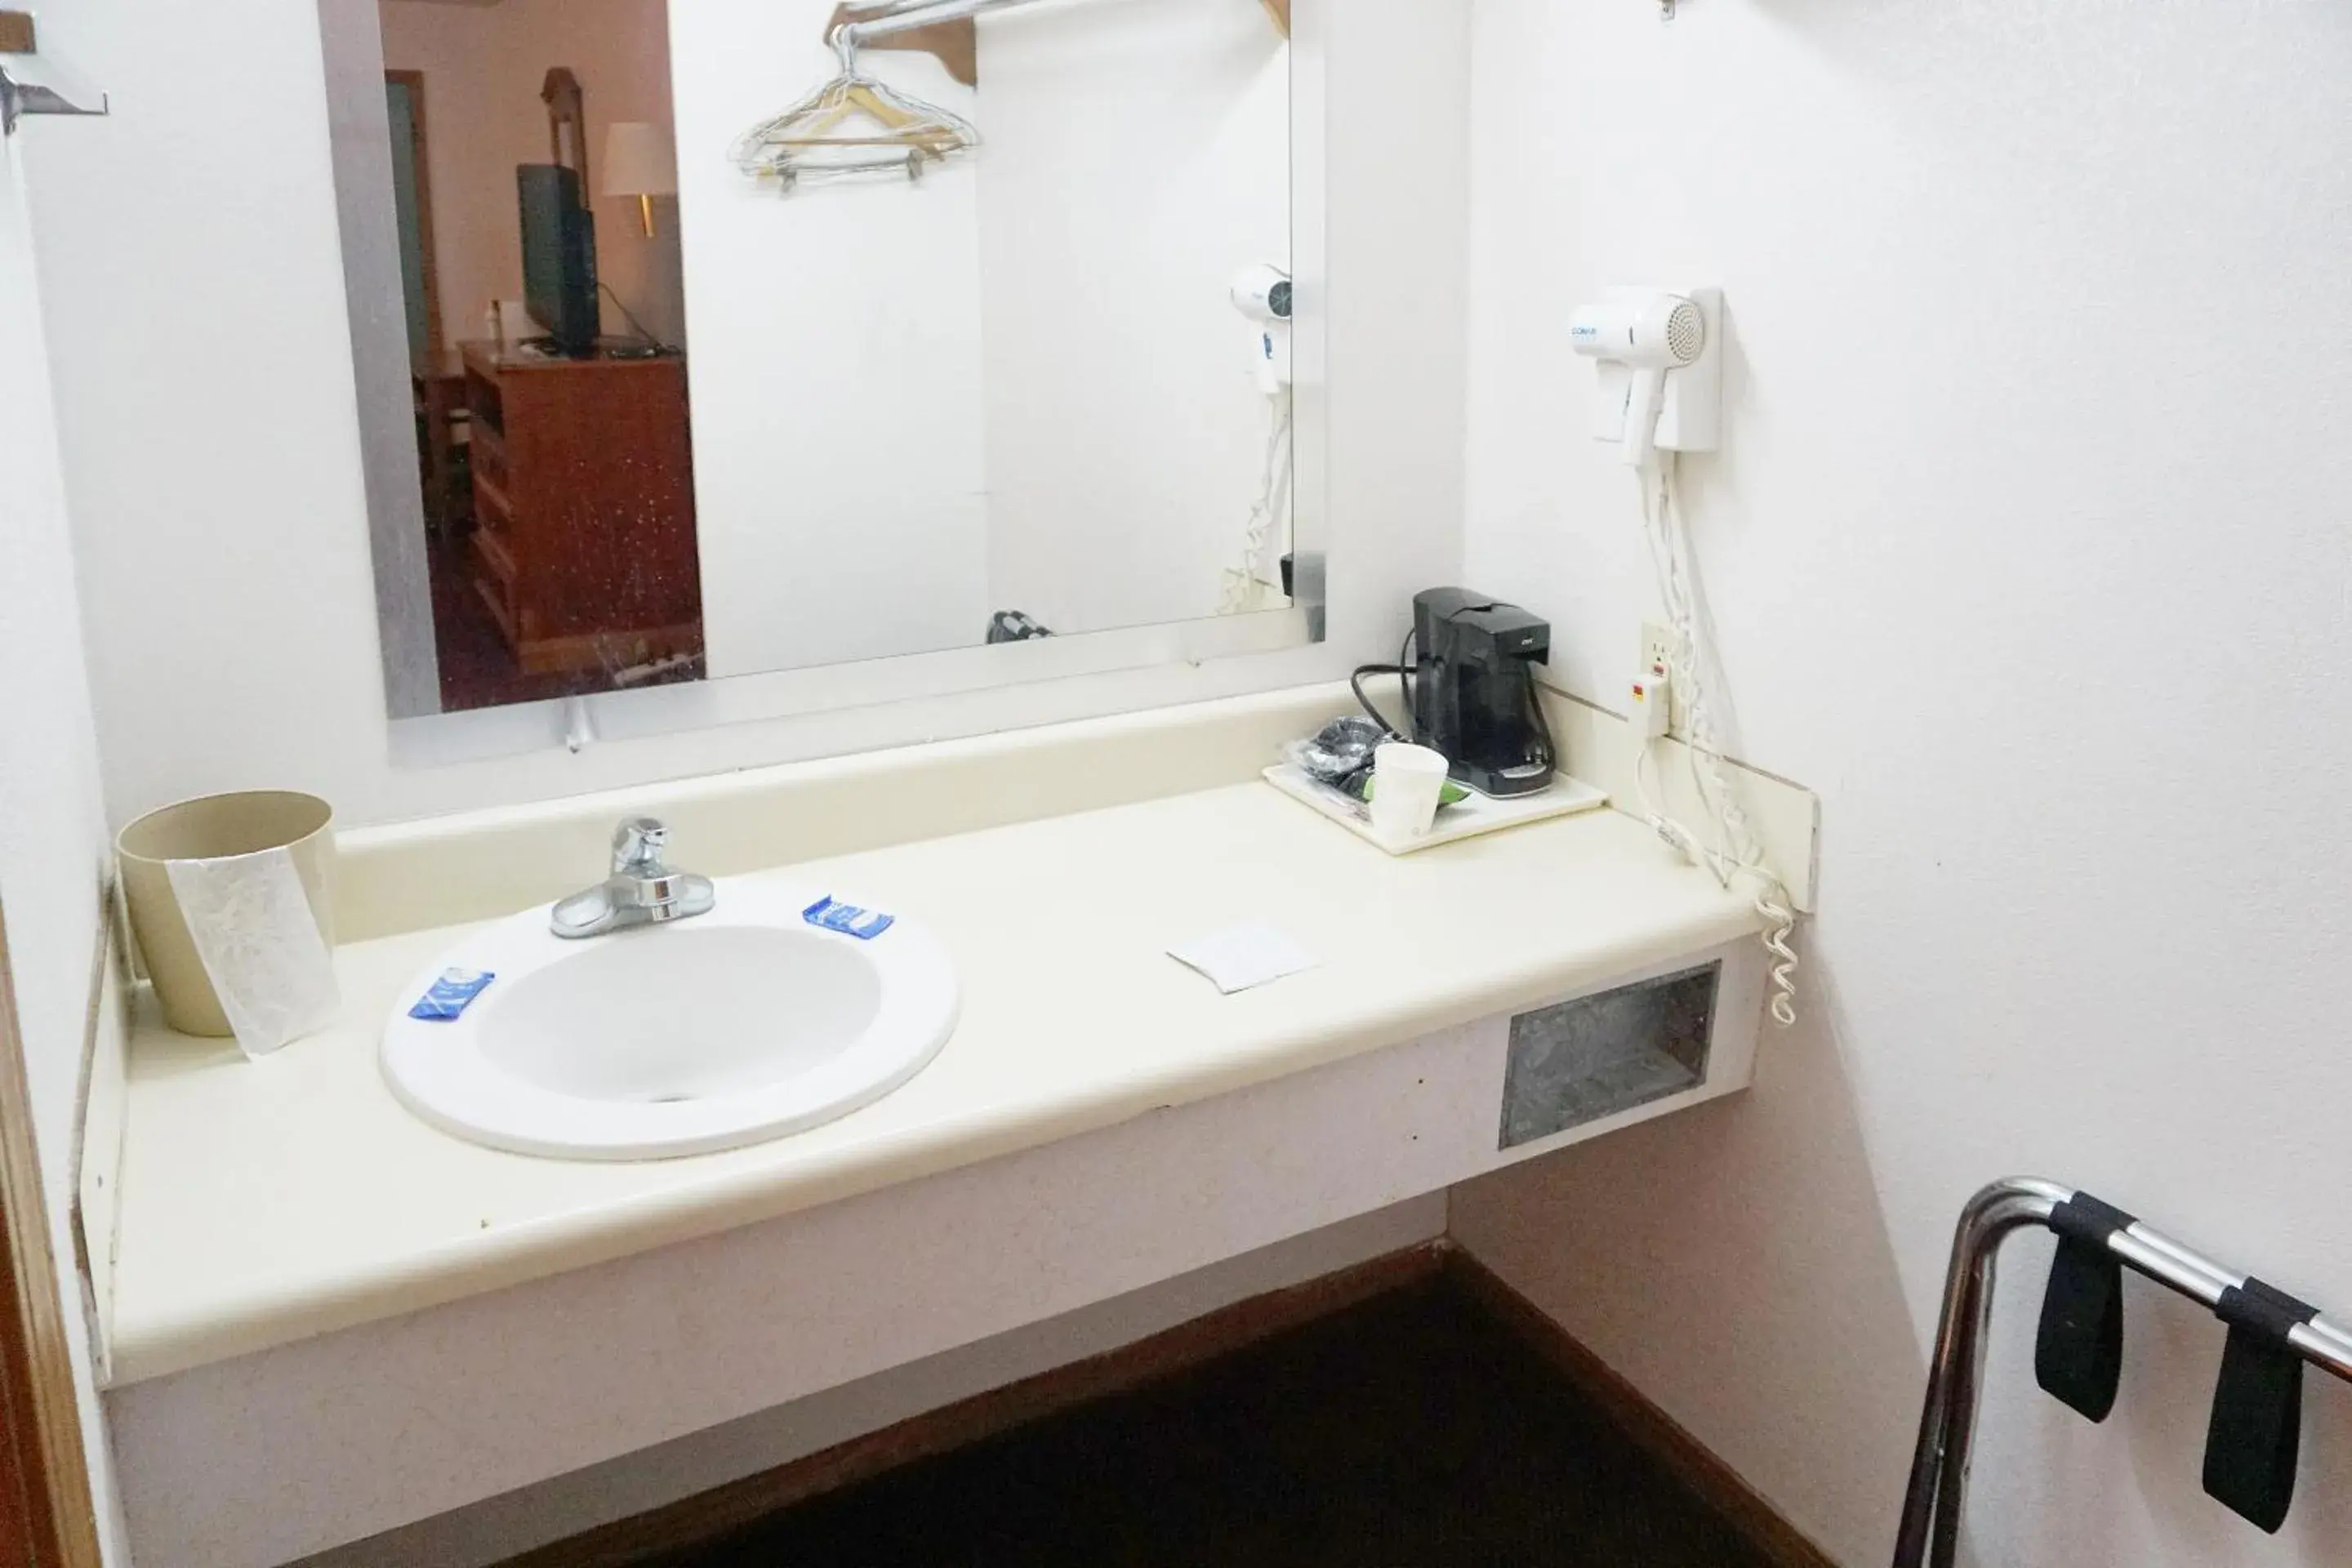 Area and facilities, Bathroom in OYO Hotel Altus N Main St